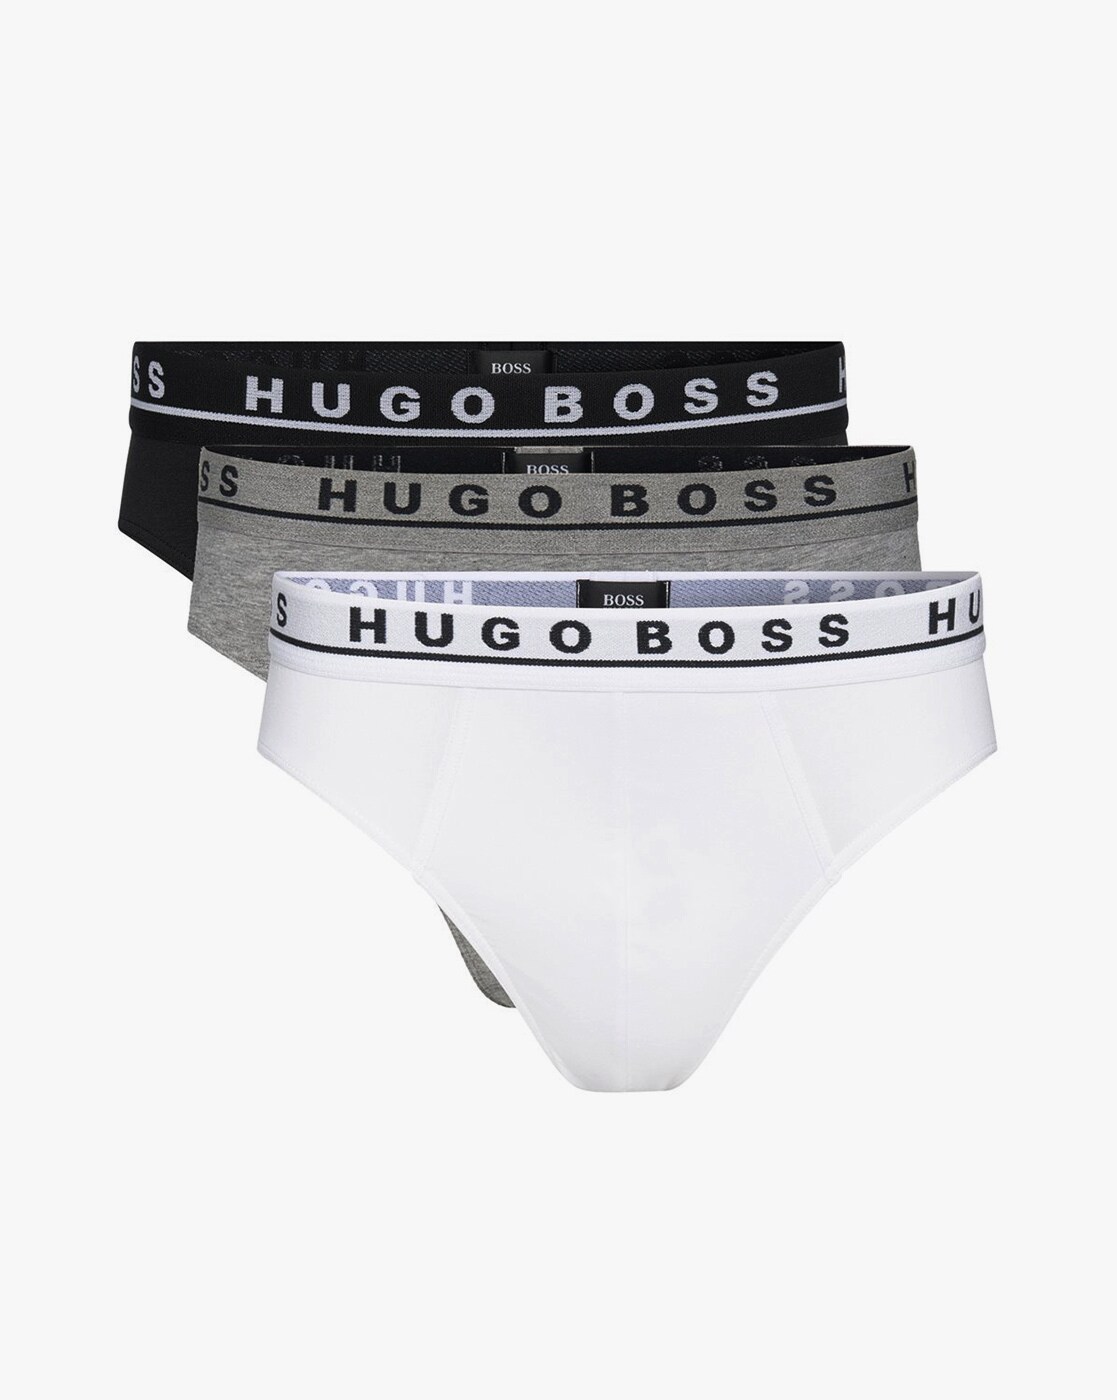 Buy Multicoloured Briefs for Men by Boss Online Ajio.com